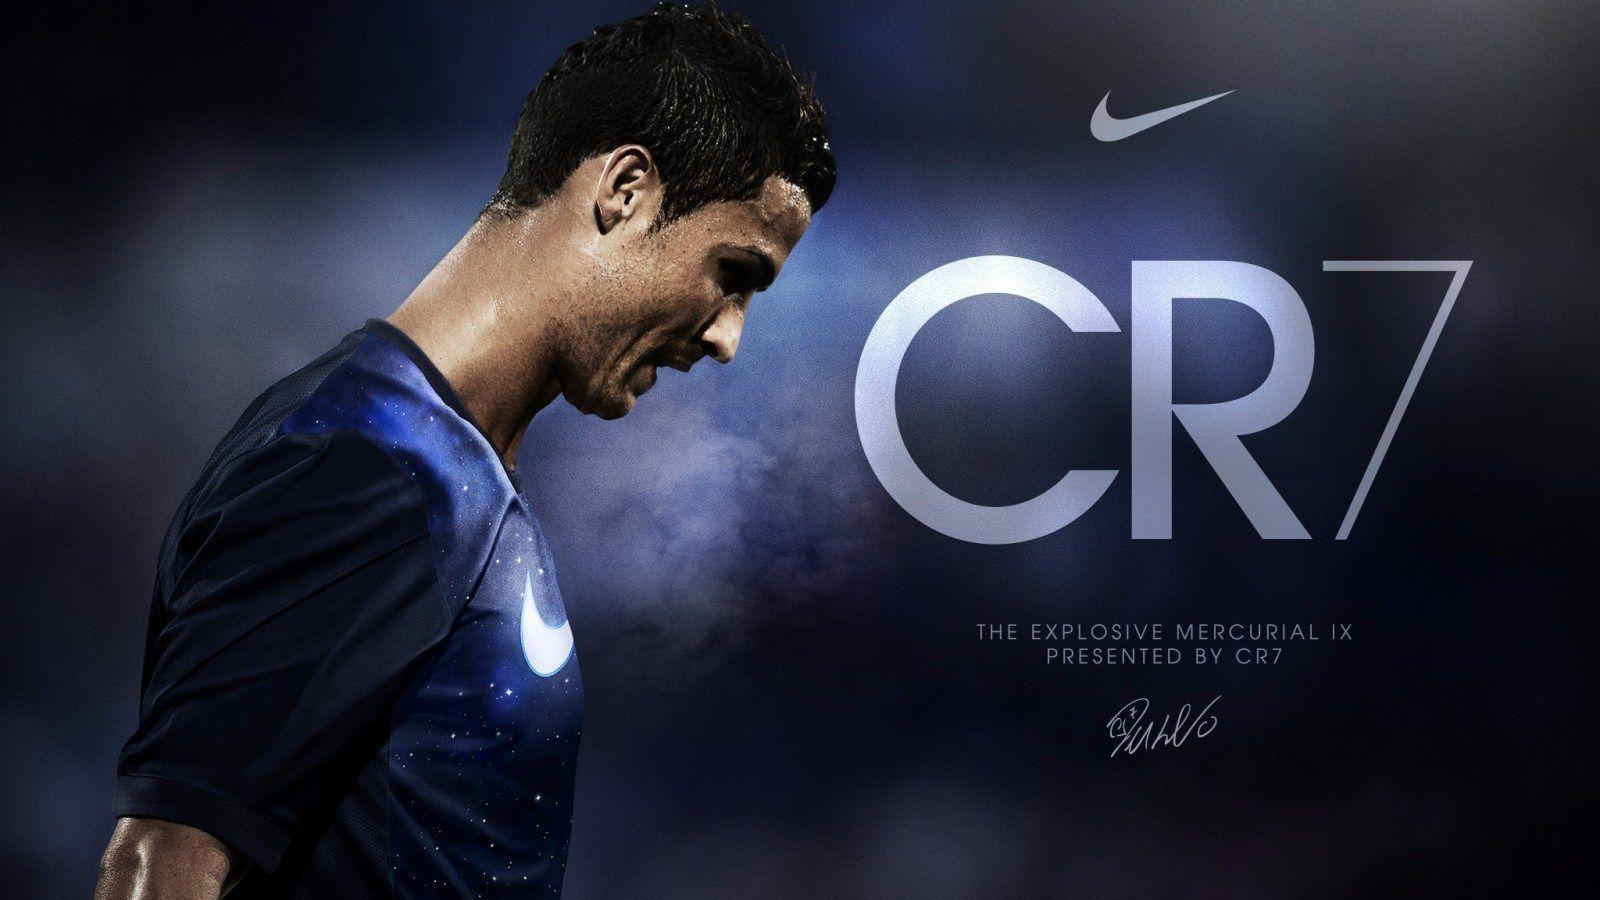 Cristiano Ronaldo Best HD Wallpaper in Real Madrid, Portugal